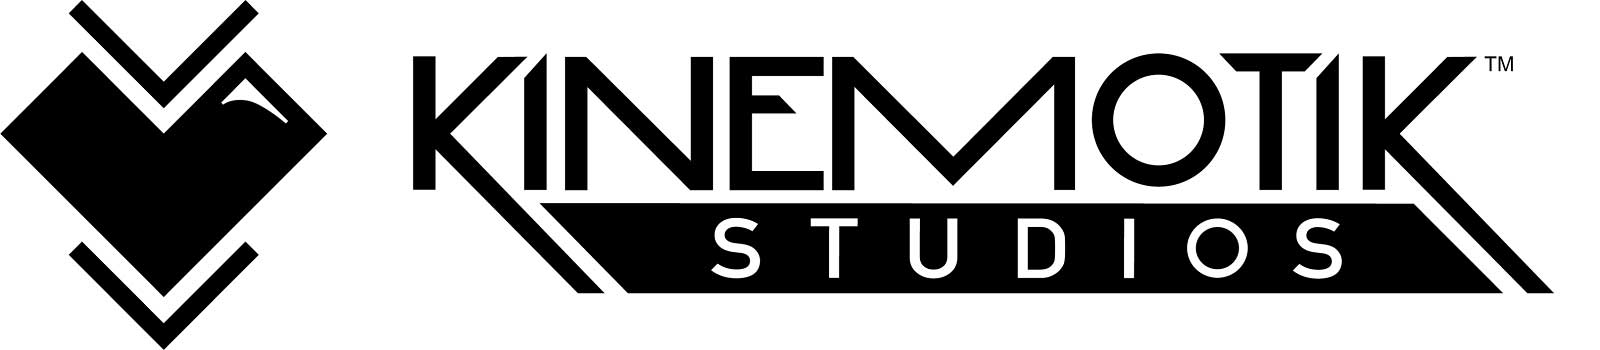 NYX Game Awards - Kinemotik Studios